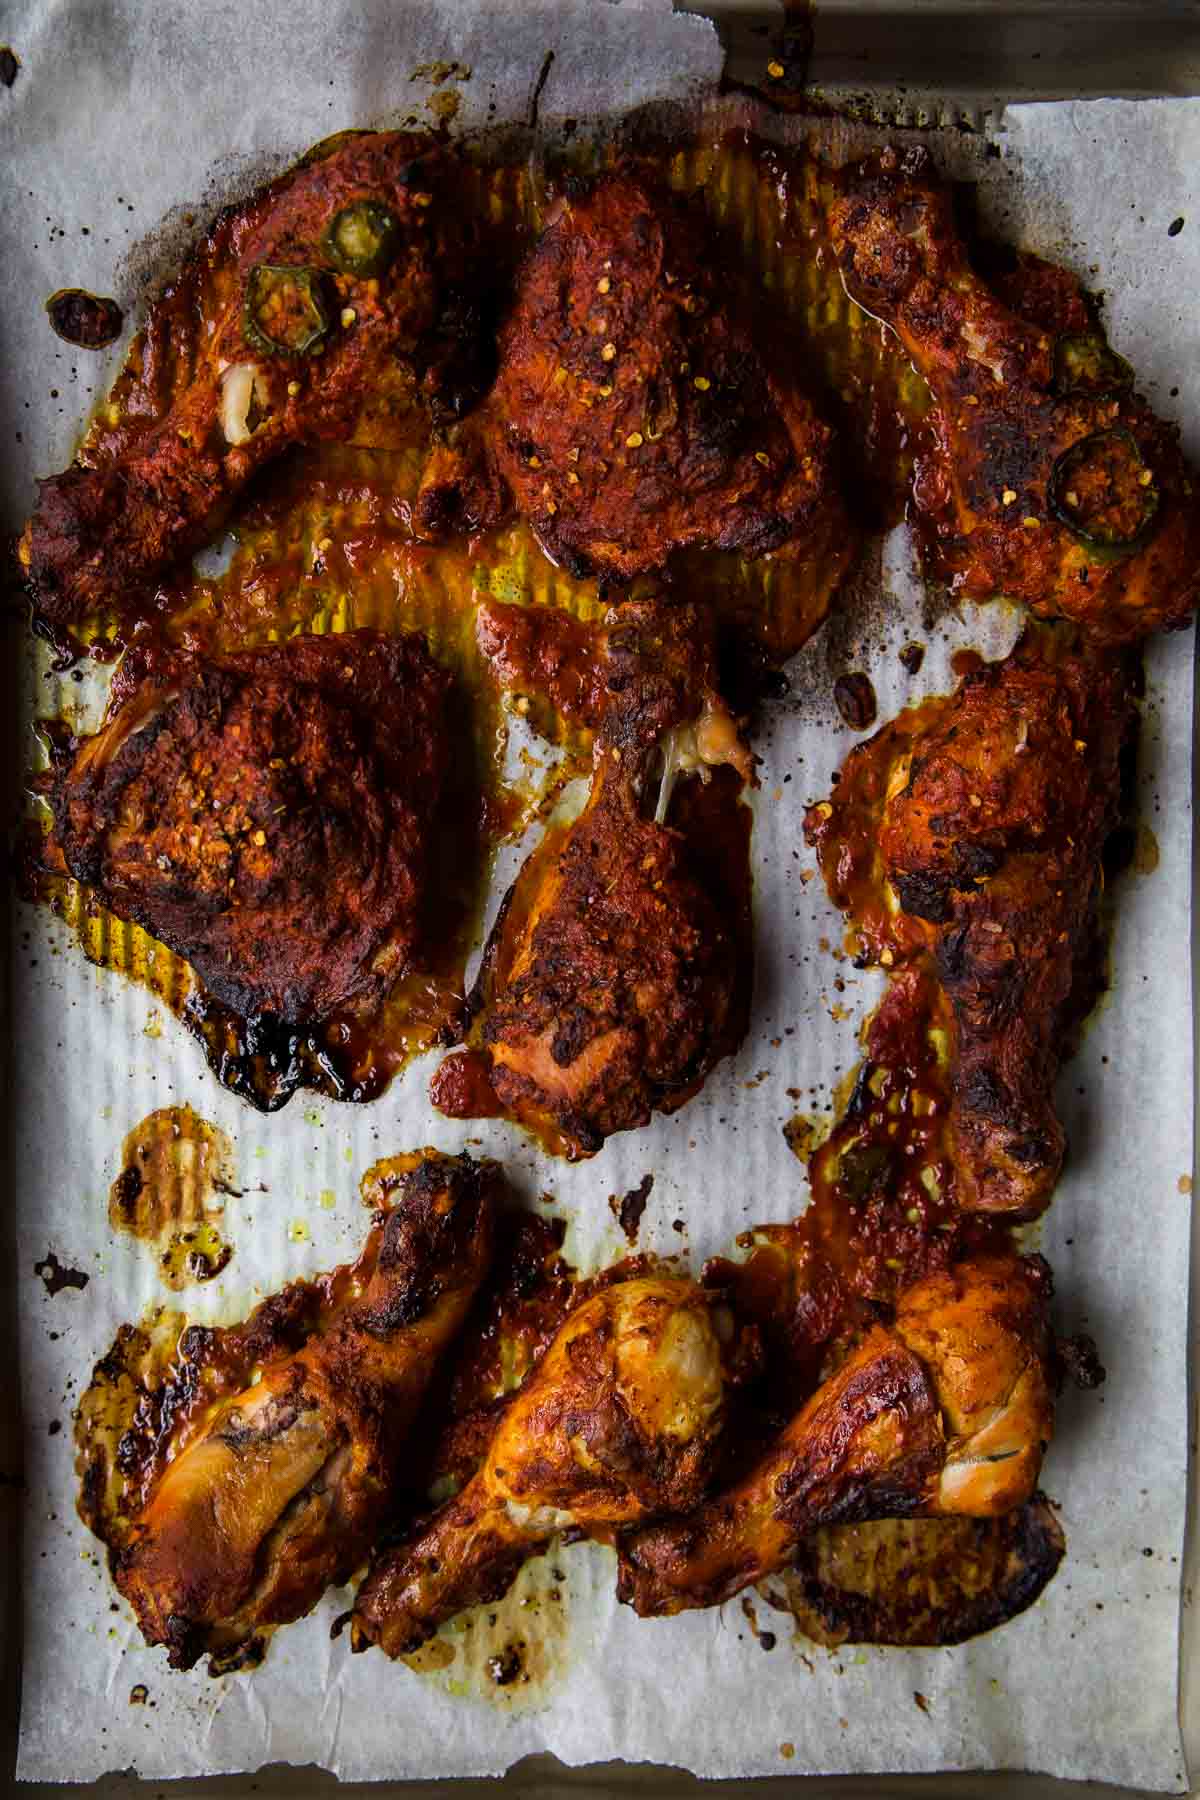 Baked Chicken in a tandoori marinade on a baking tray.